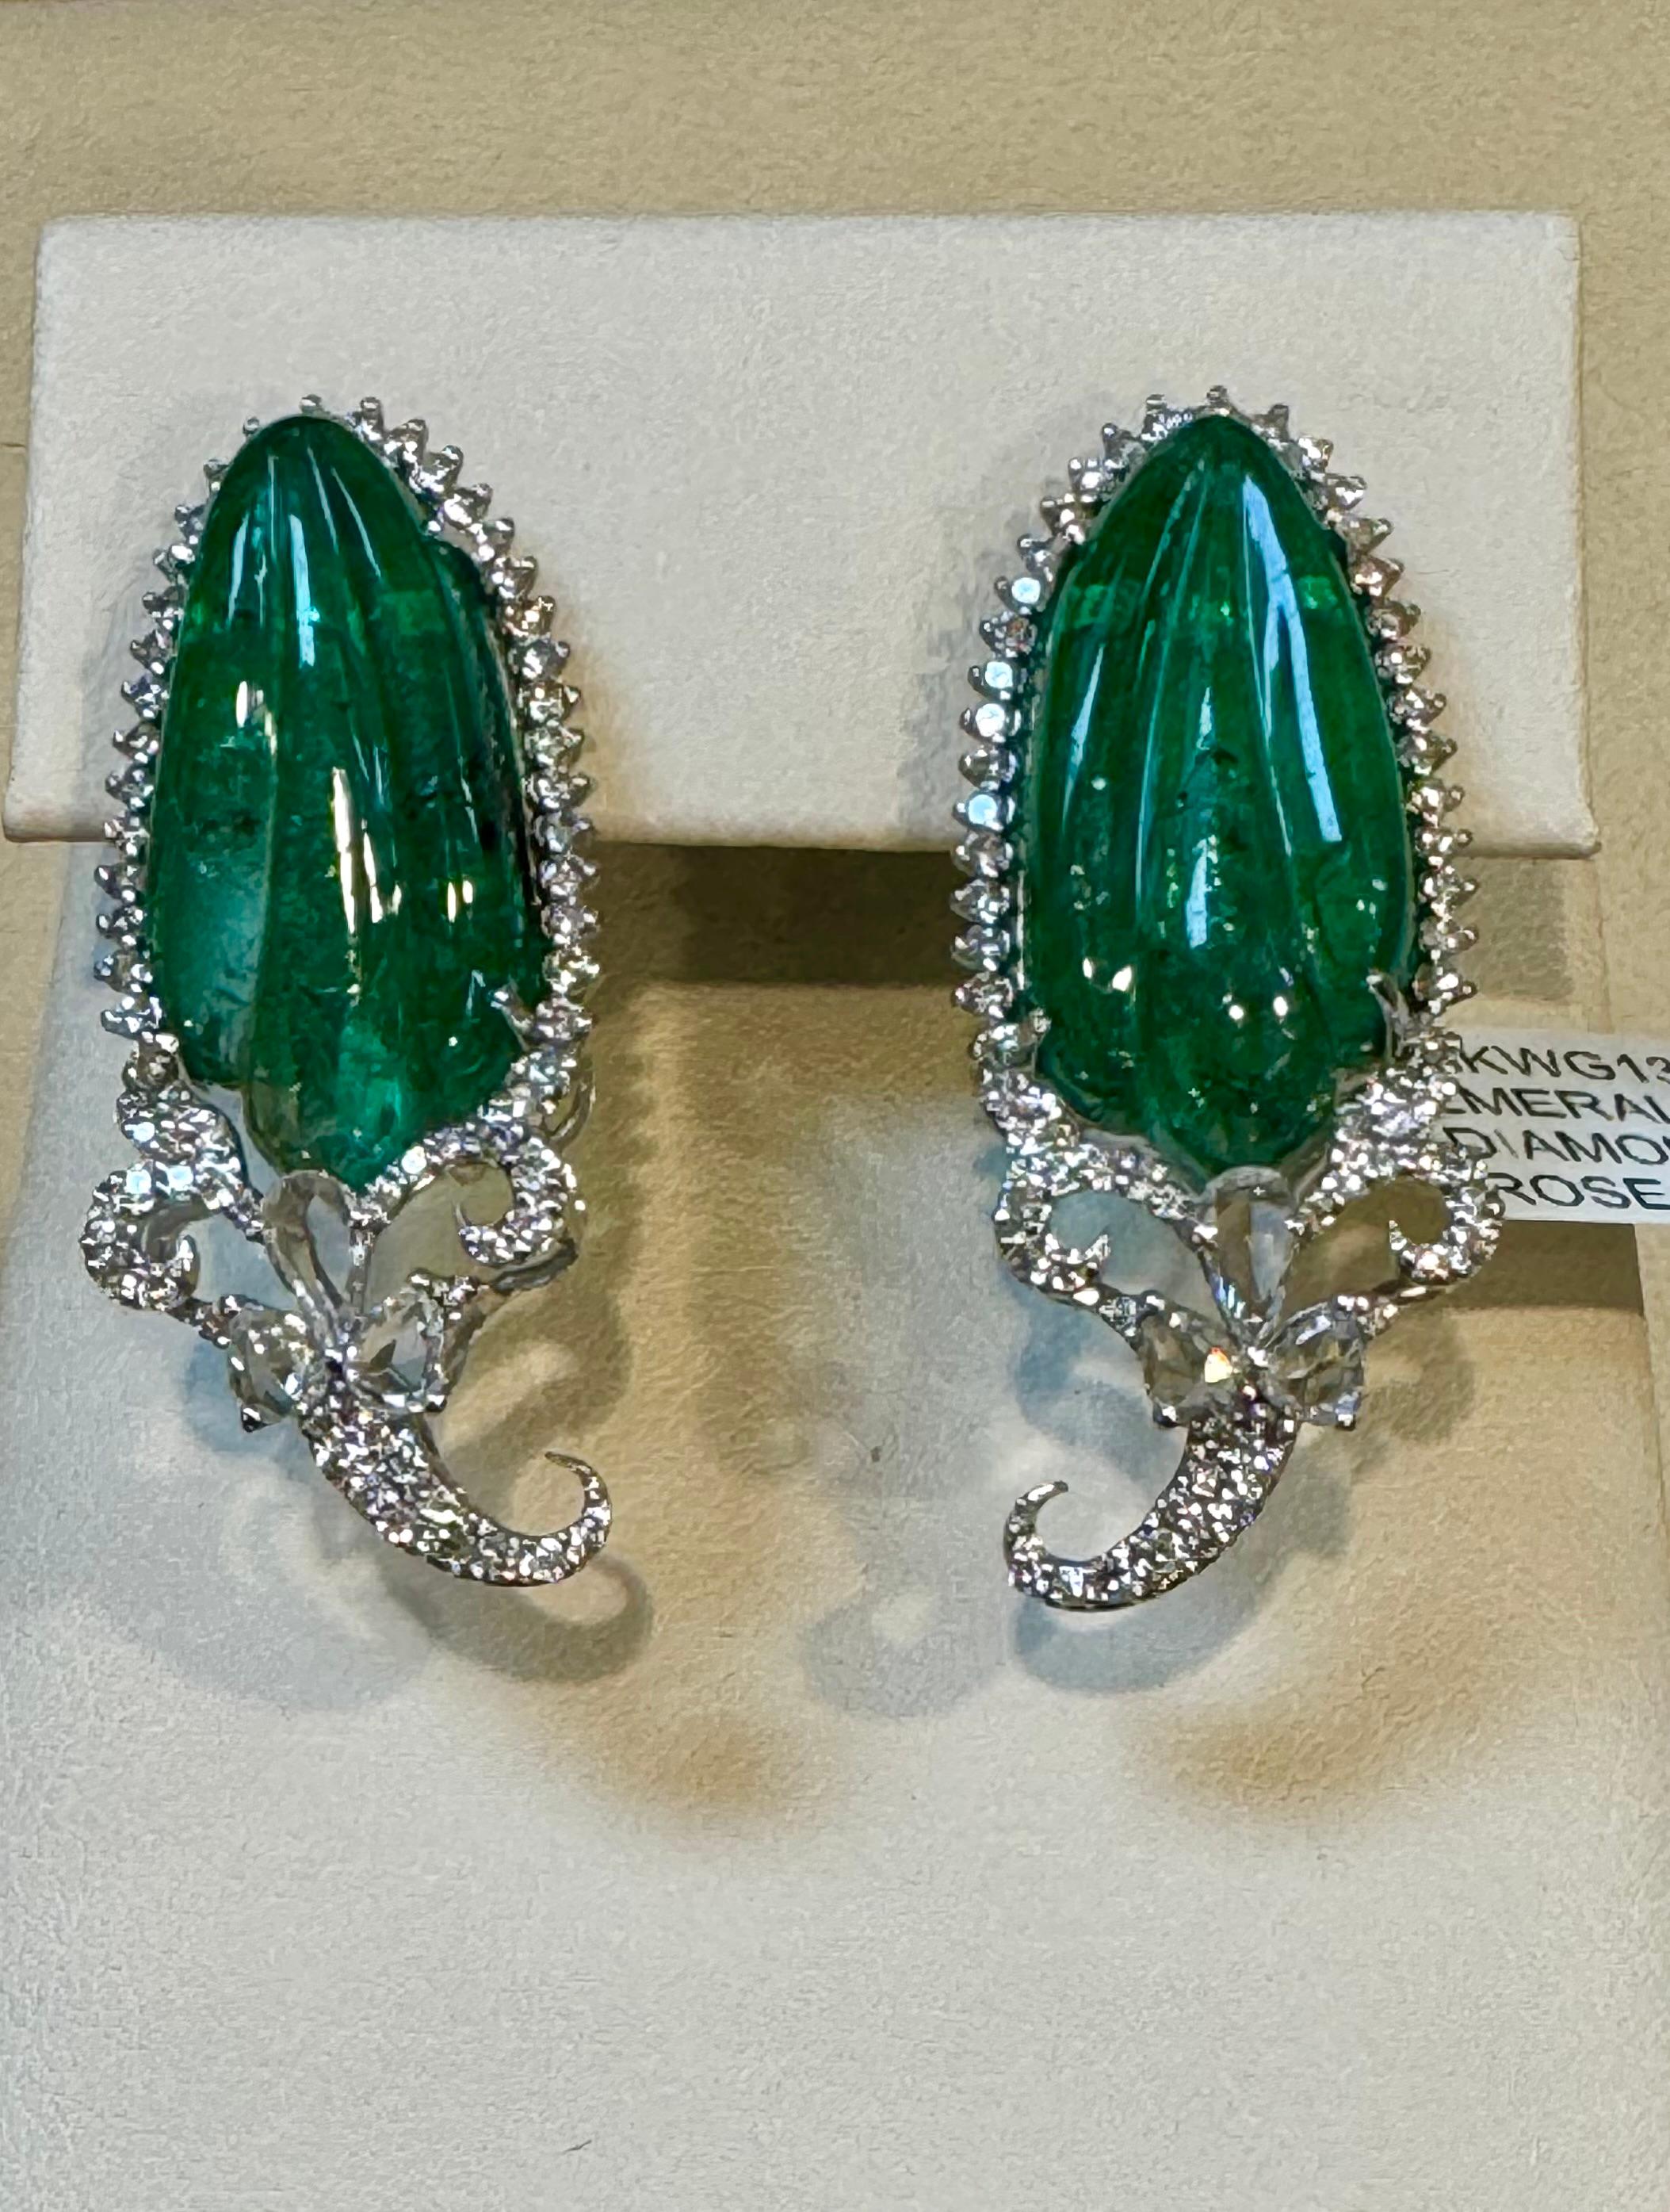 22 Ct Carved Emerald & 2 Ct Diamond Earrings 18 Karat White Gold Post Earrings For Sale 2